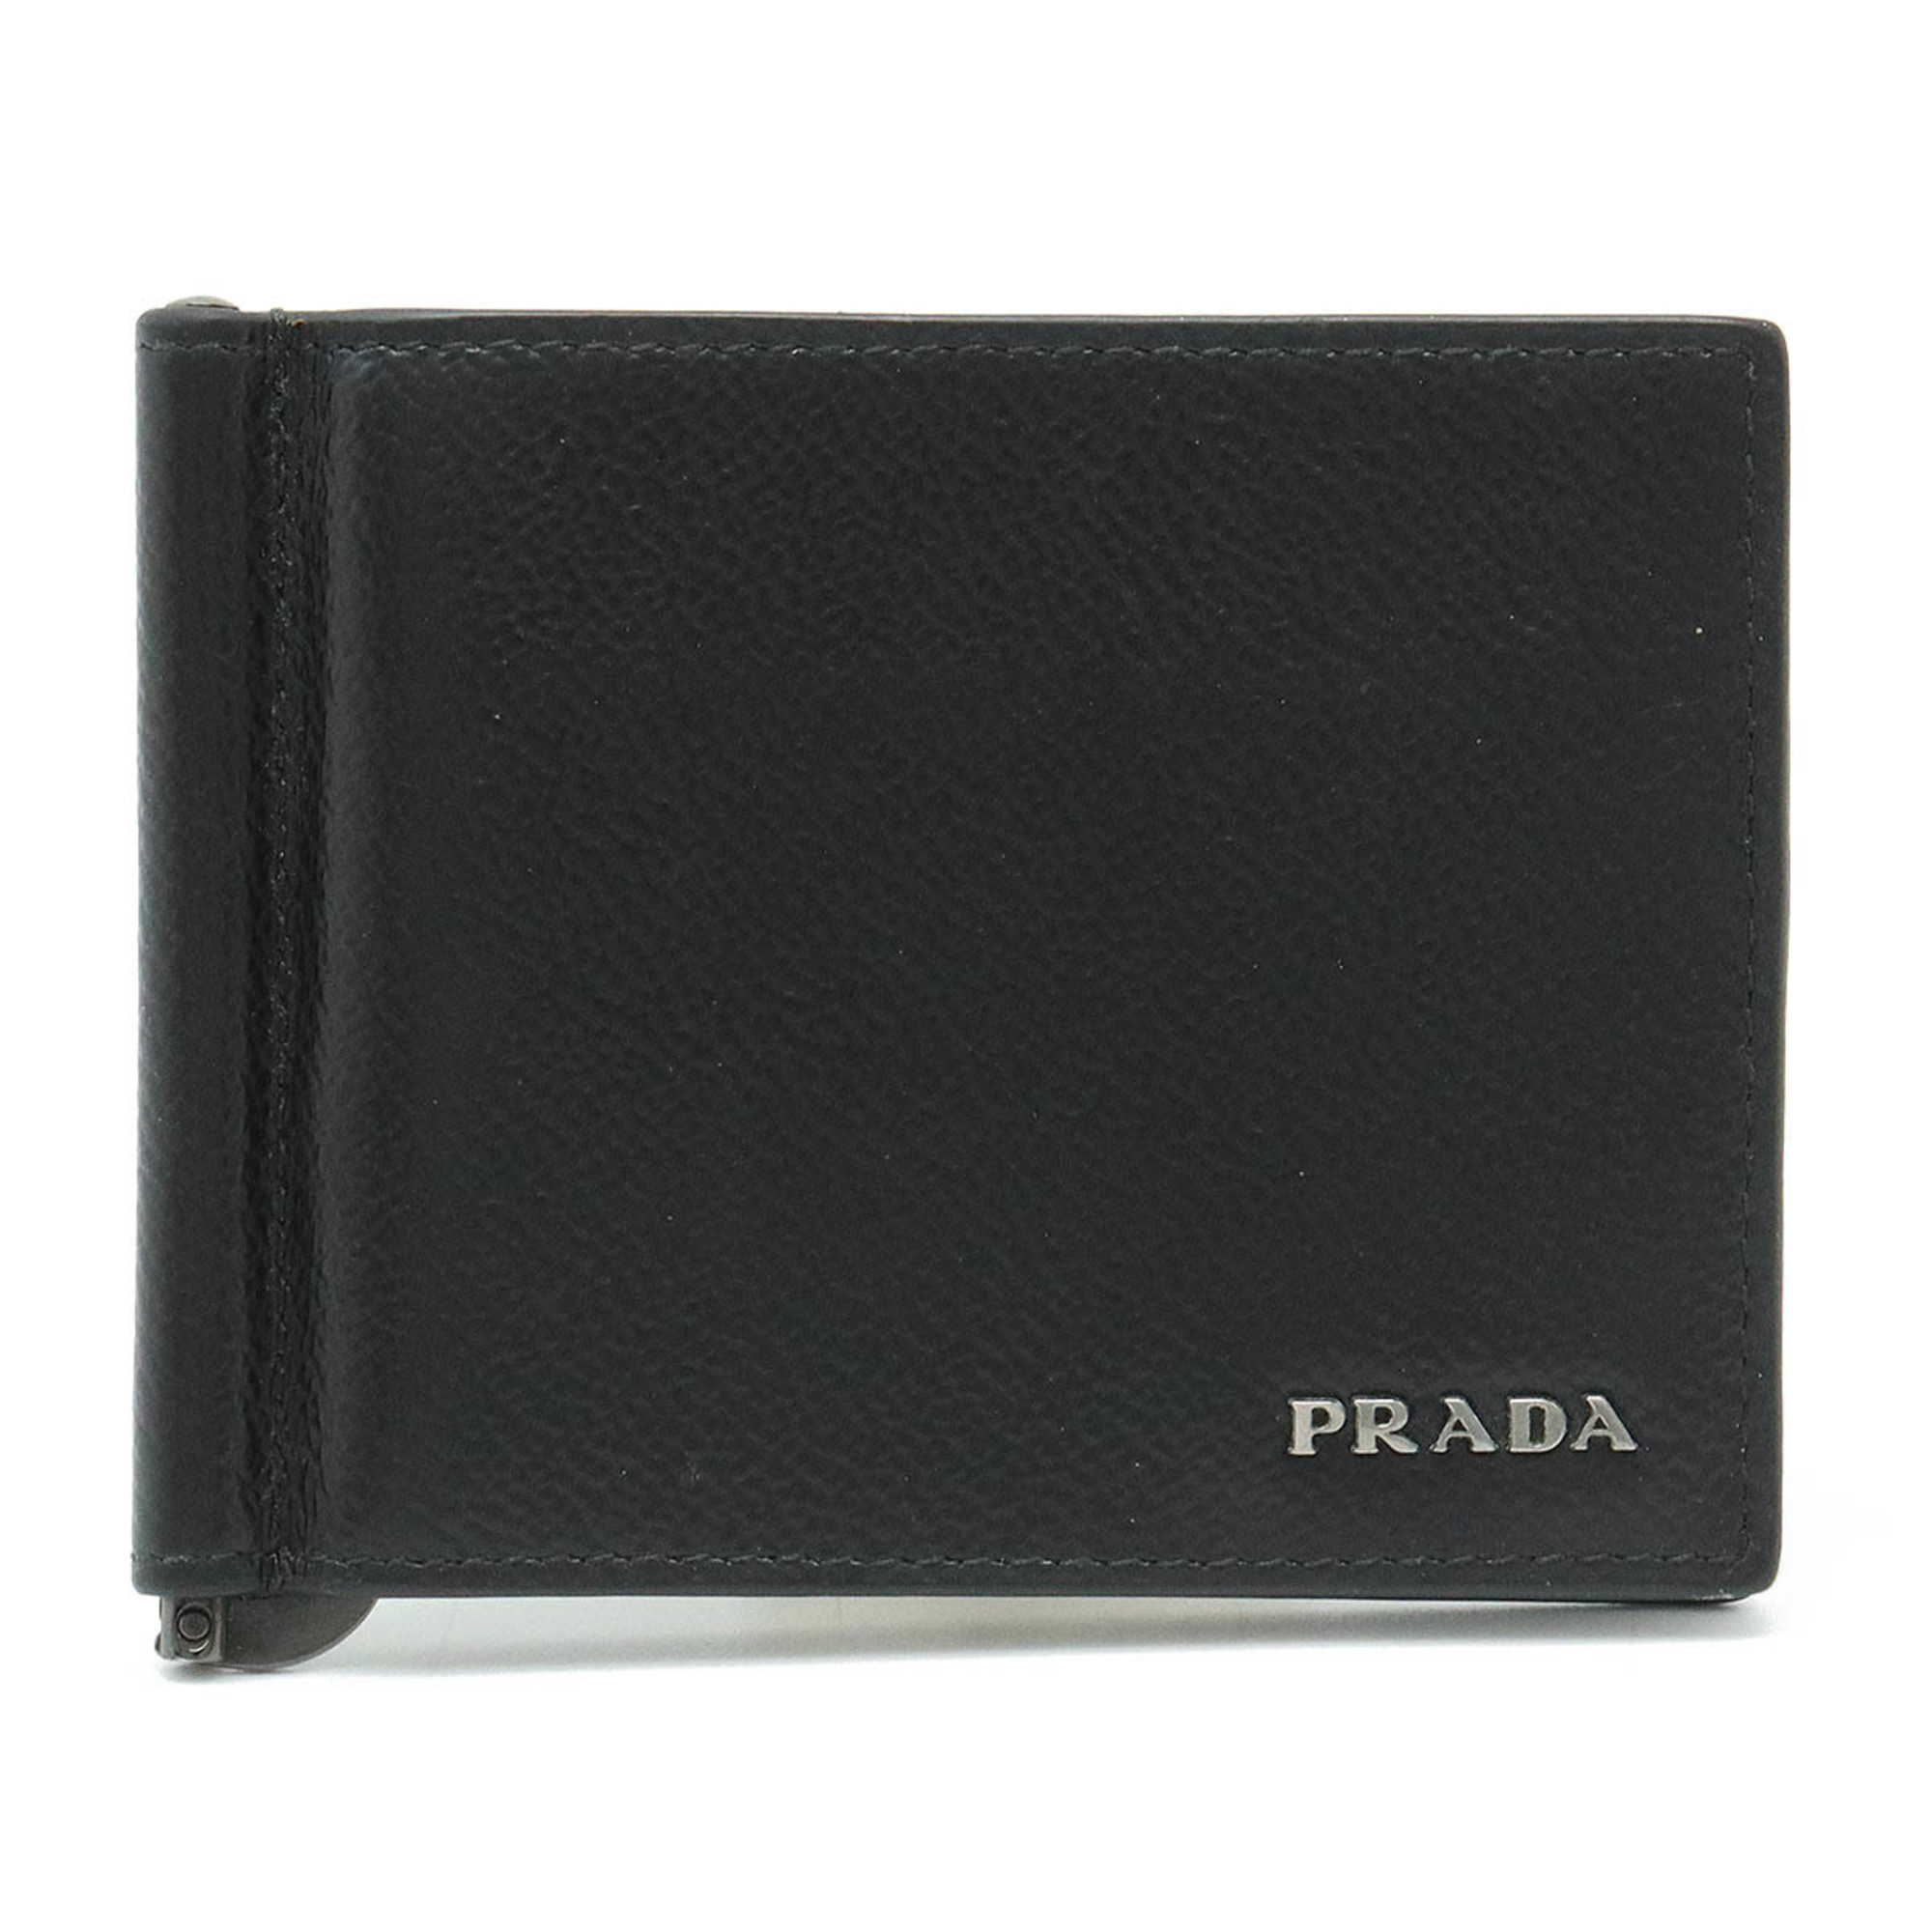 PRADA Bifold Billfold Wallet Money Clip Type Leather NERO Black Navy 2MN077